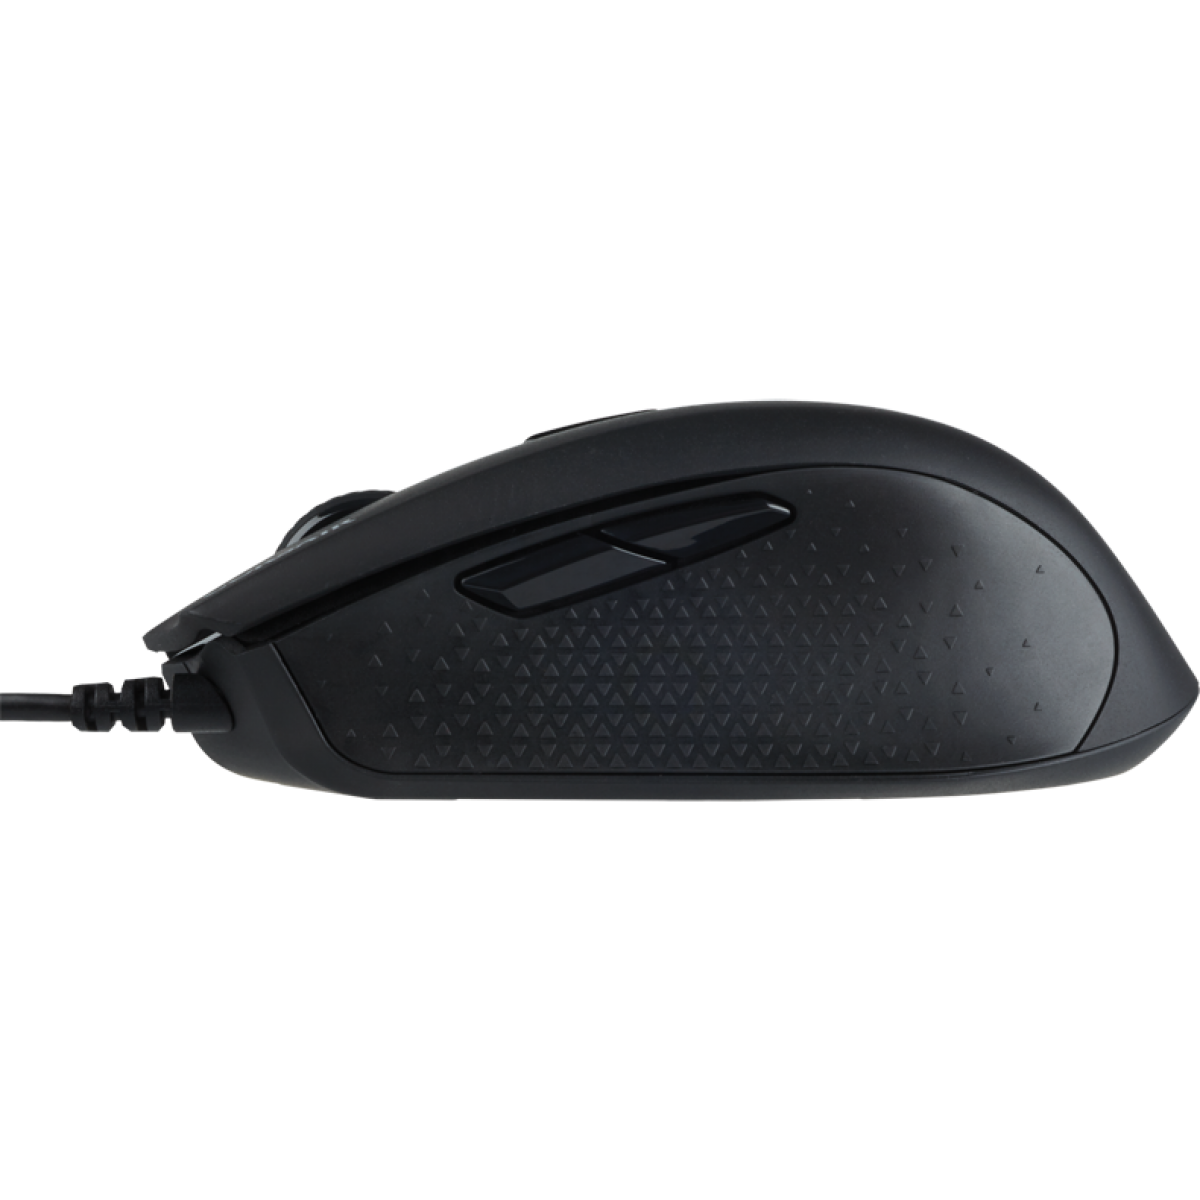 Mouse Corsair Gamer Harpoon CH-9301011-NA RGB 6 Botões 6000 DPI Black